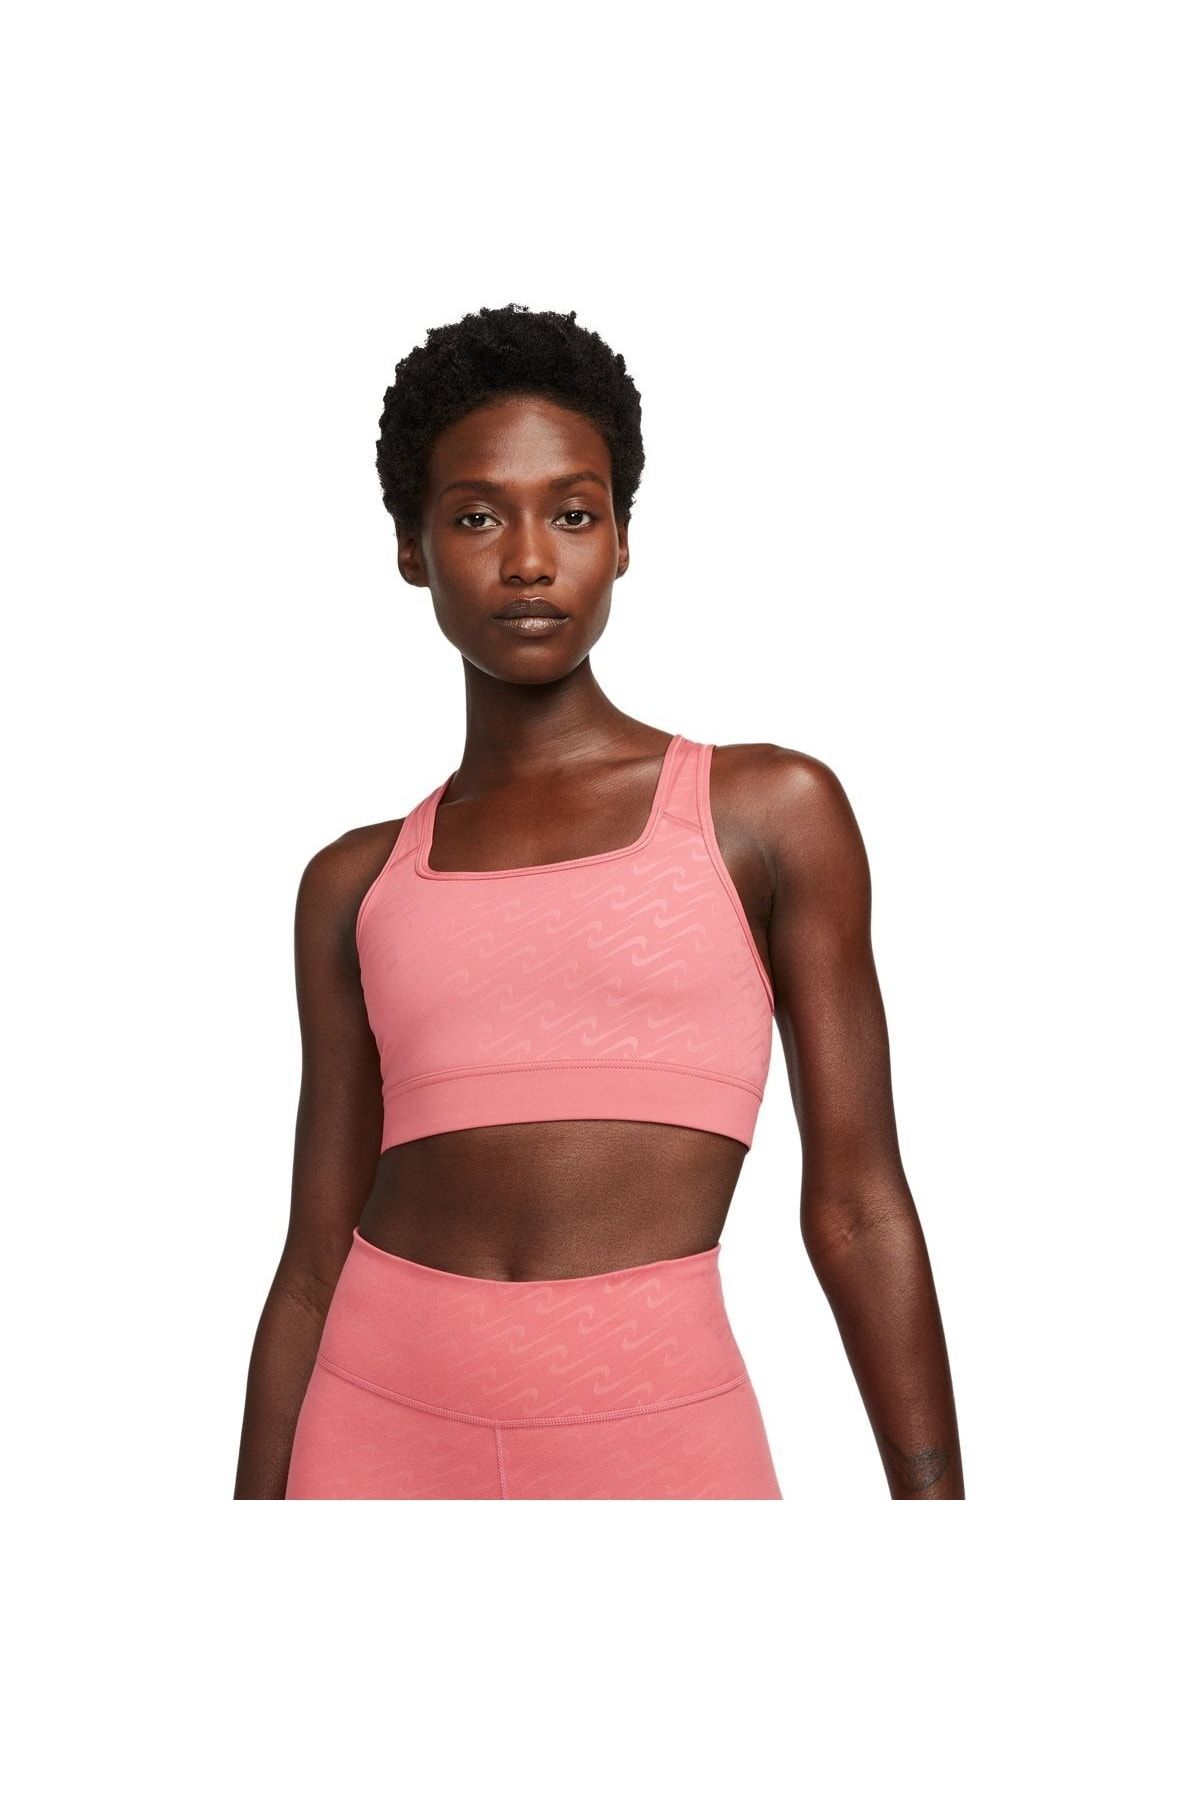 Nike Women's sports bra polyester/spandex blend medium pad icon clash bra  black/orange, Women's Fashion, Activewear on Carousell